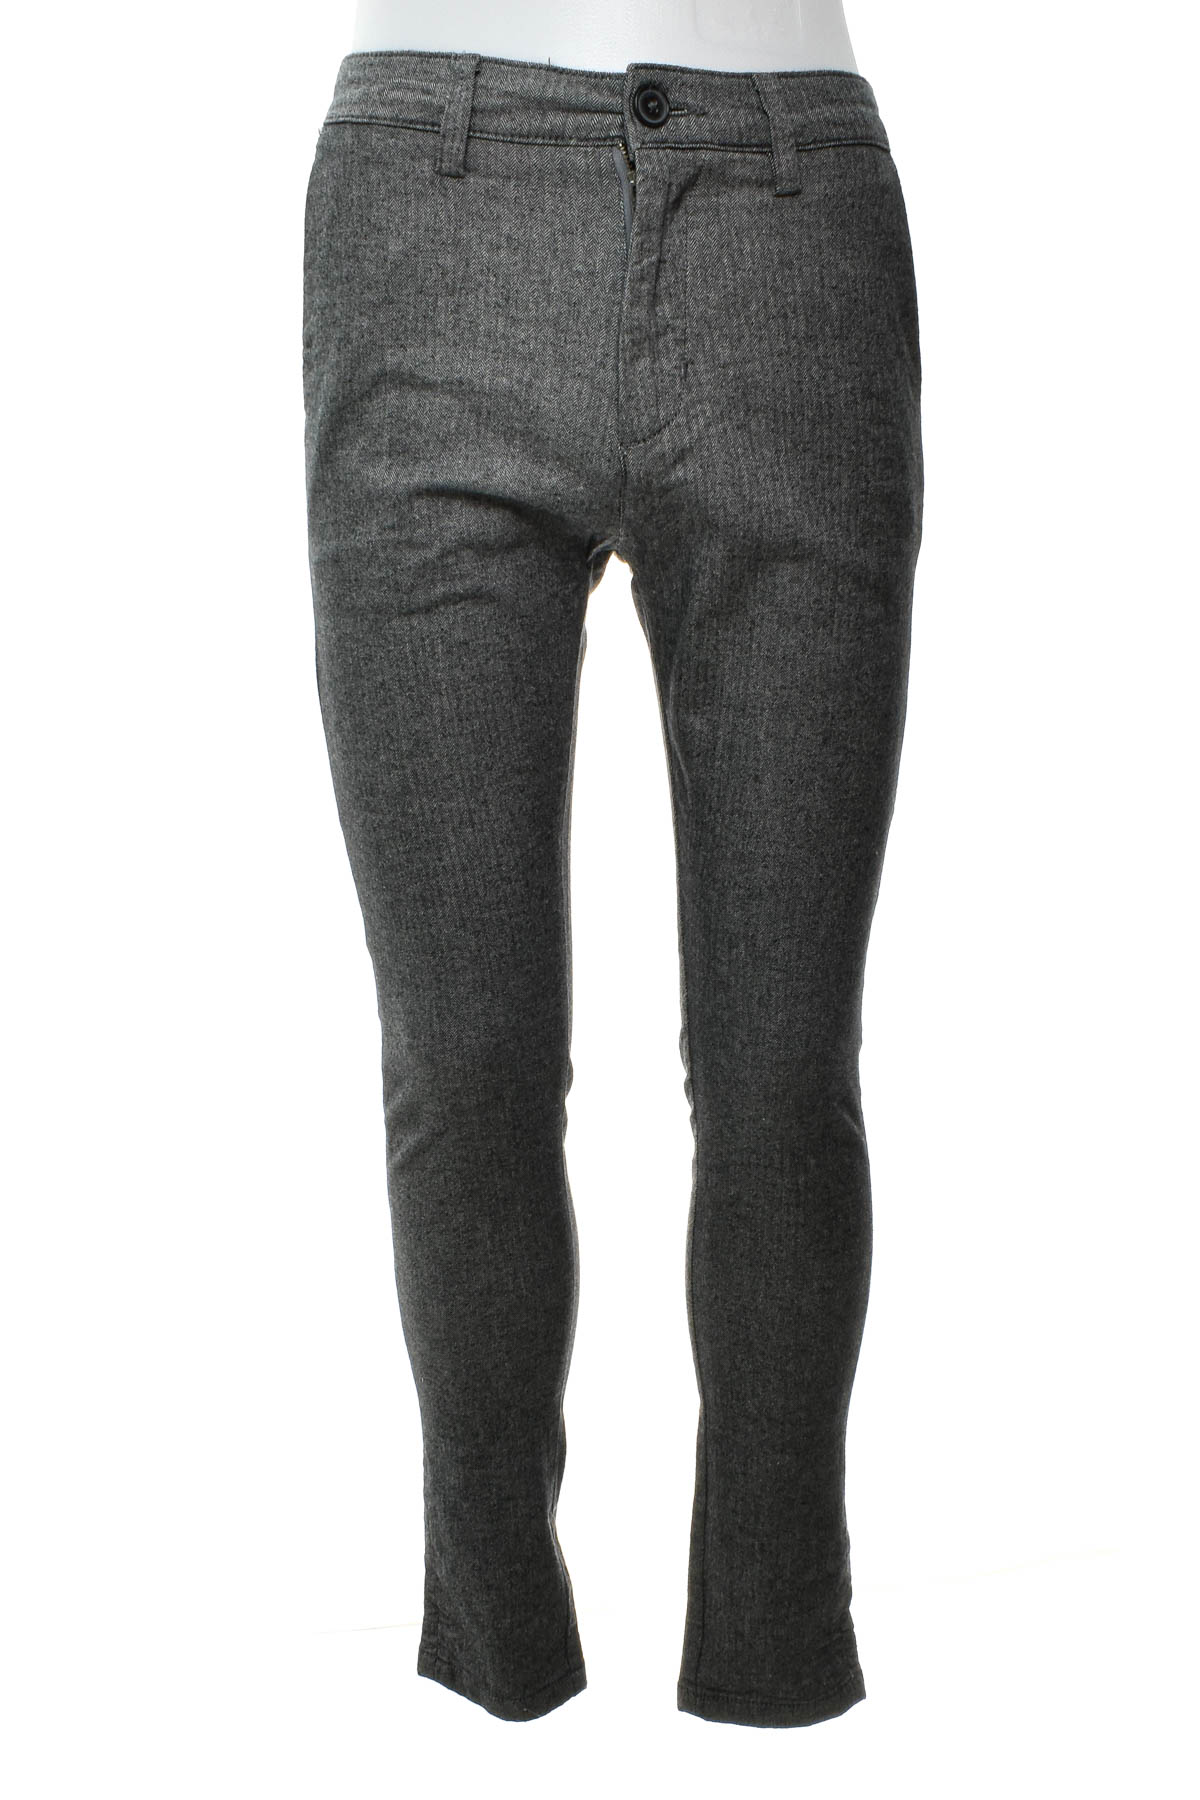 Men's trousers - SMOG - 0